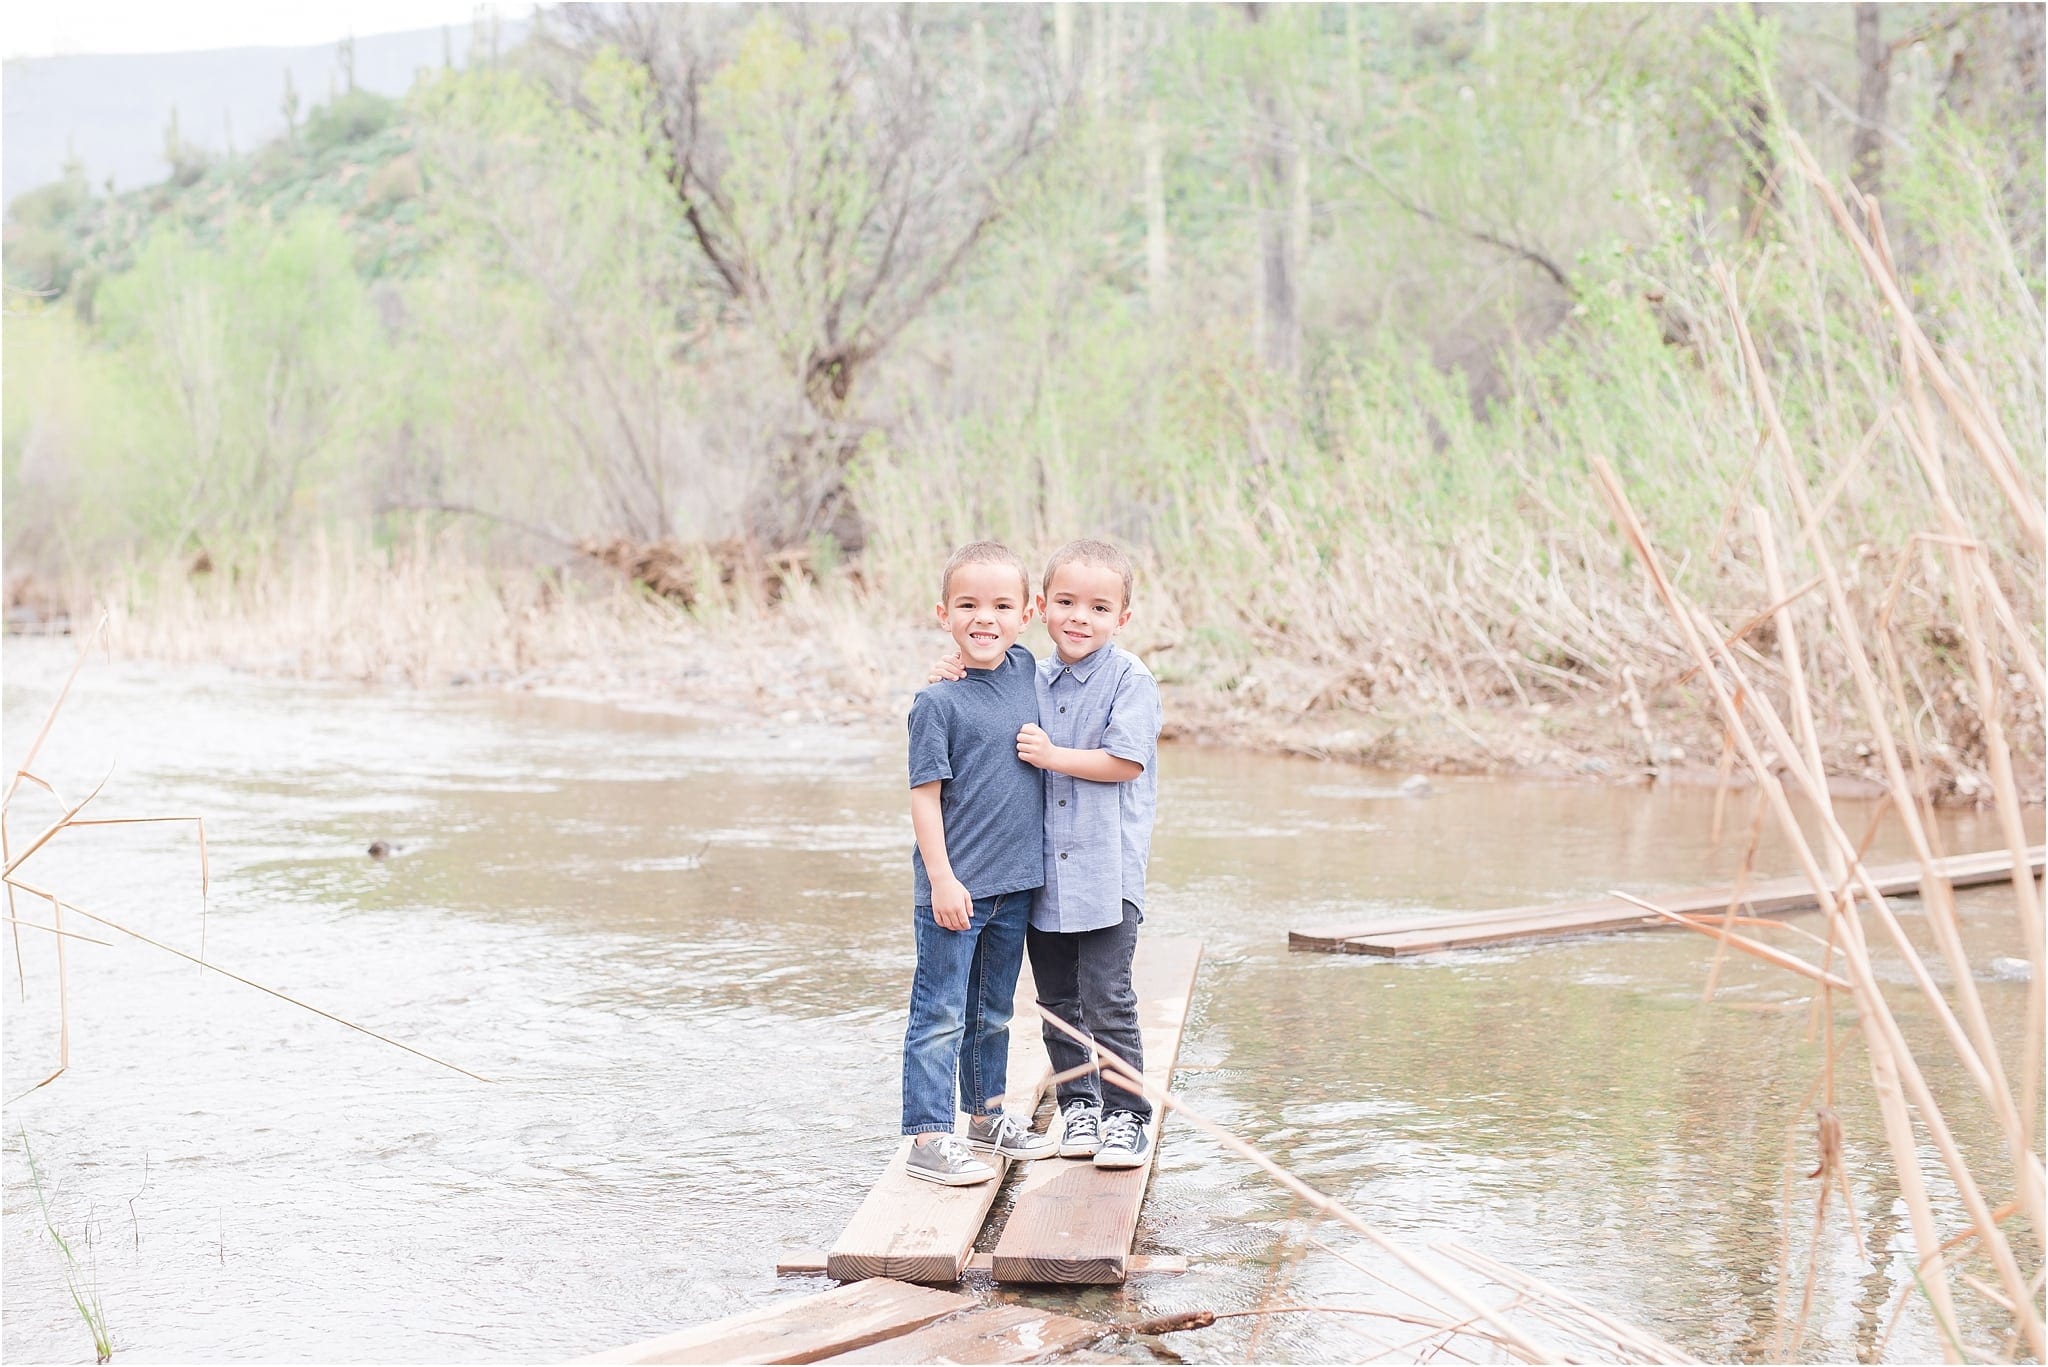 Twin boys standing on wood in creek